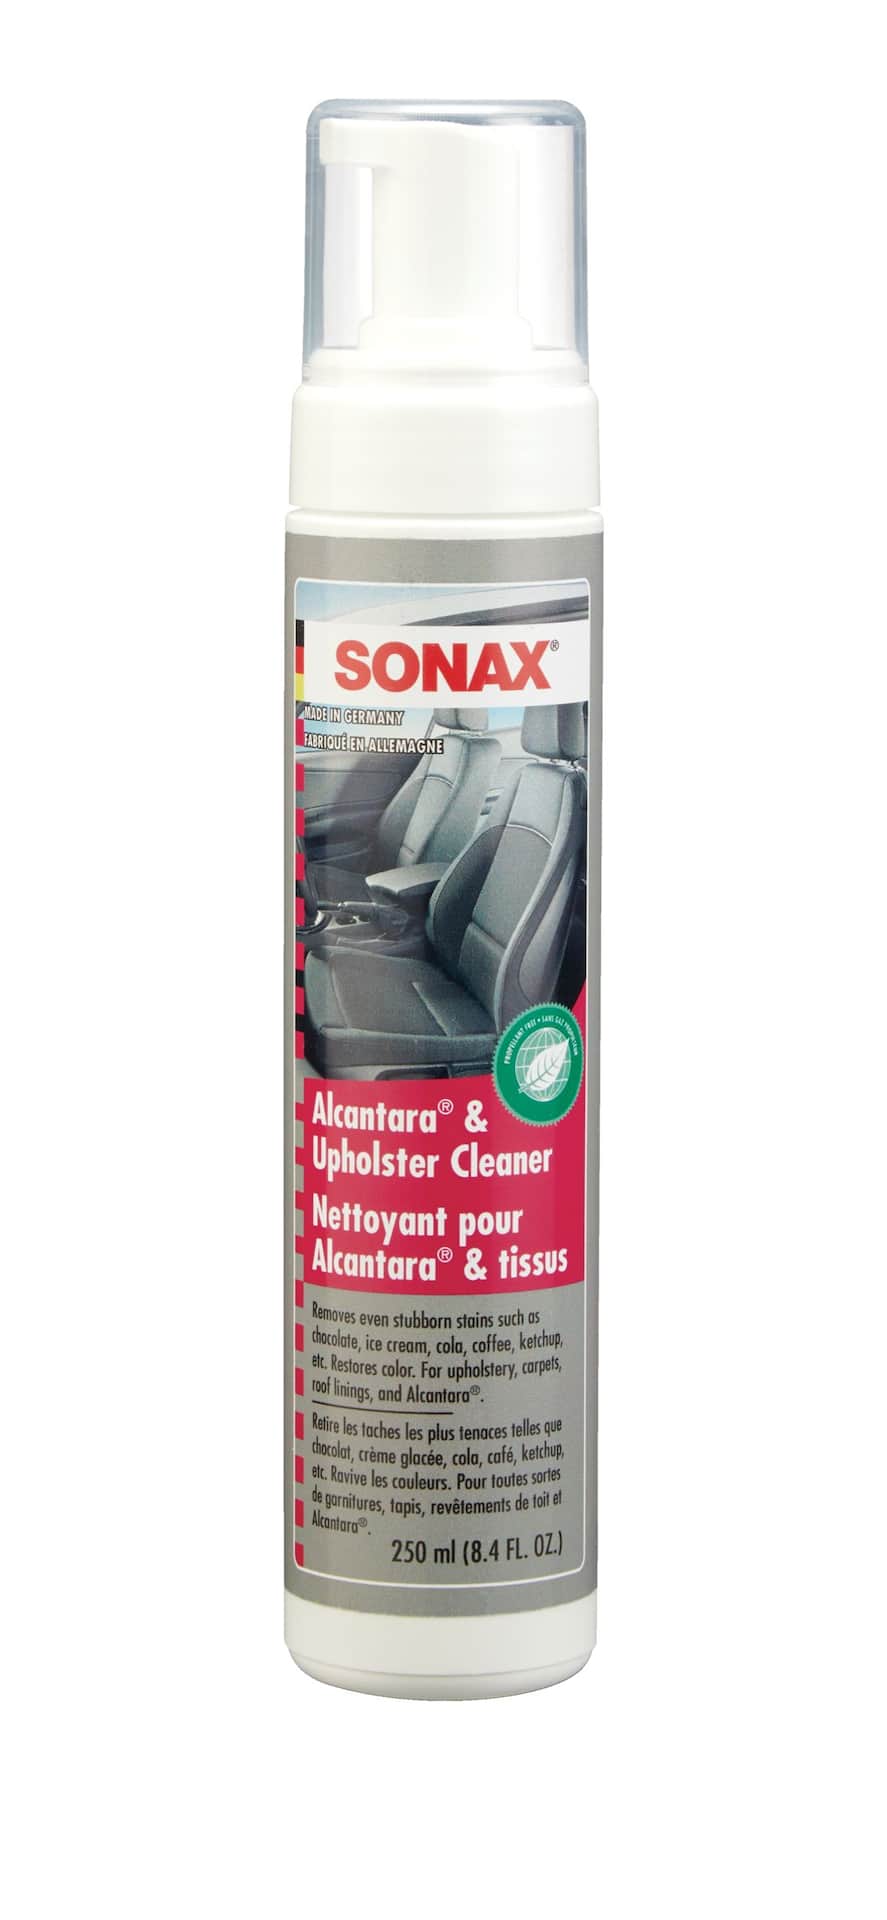 Sonax Car Alcantara & Upholstery Cleaner Spray, 250-mL